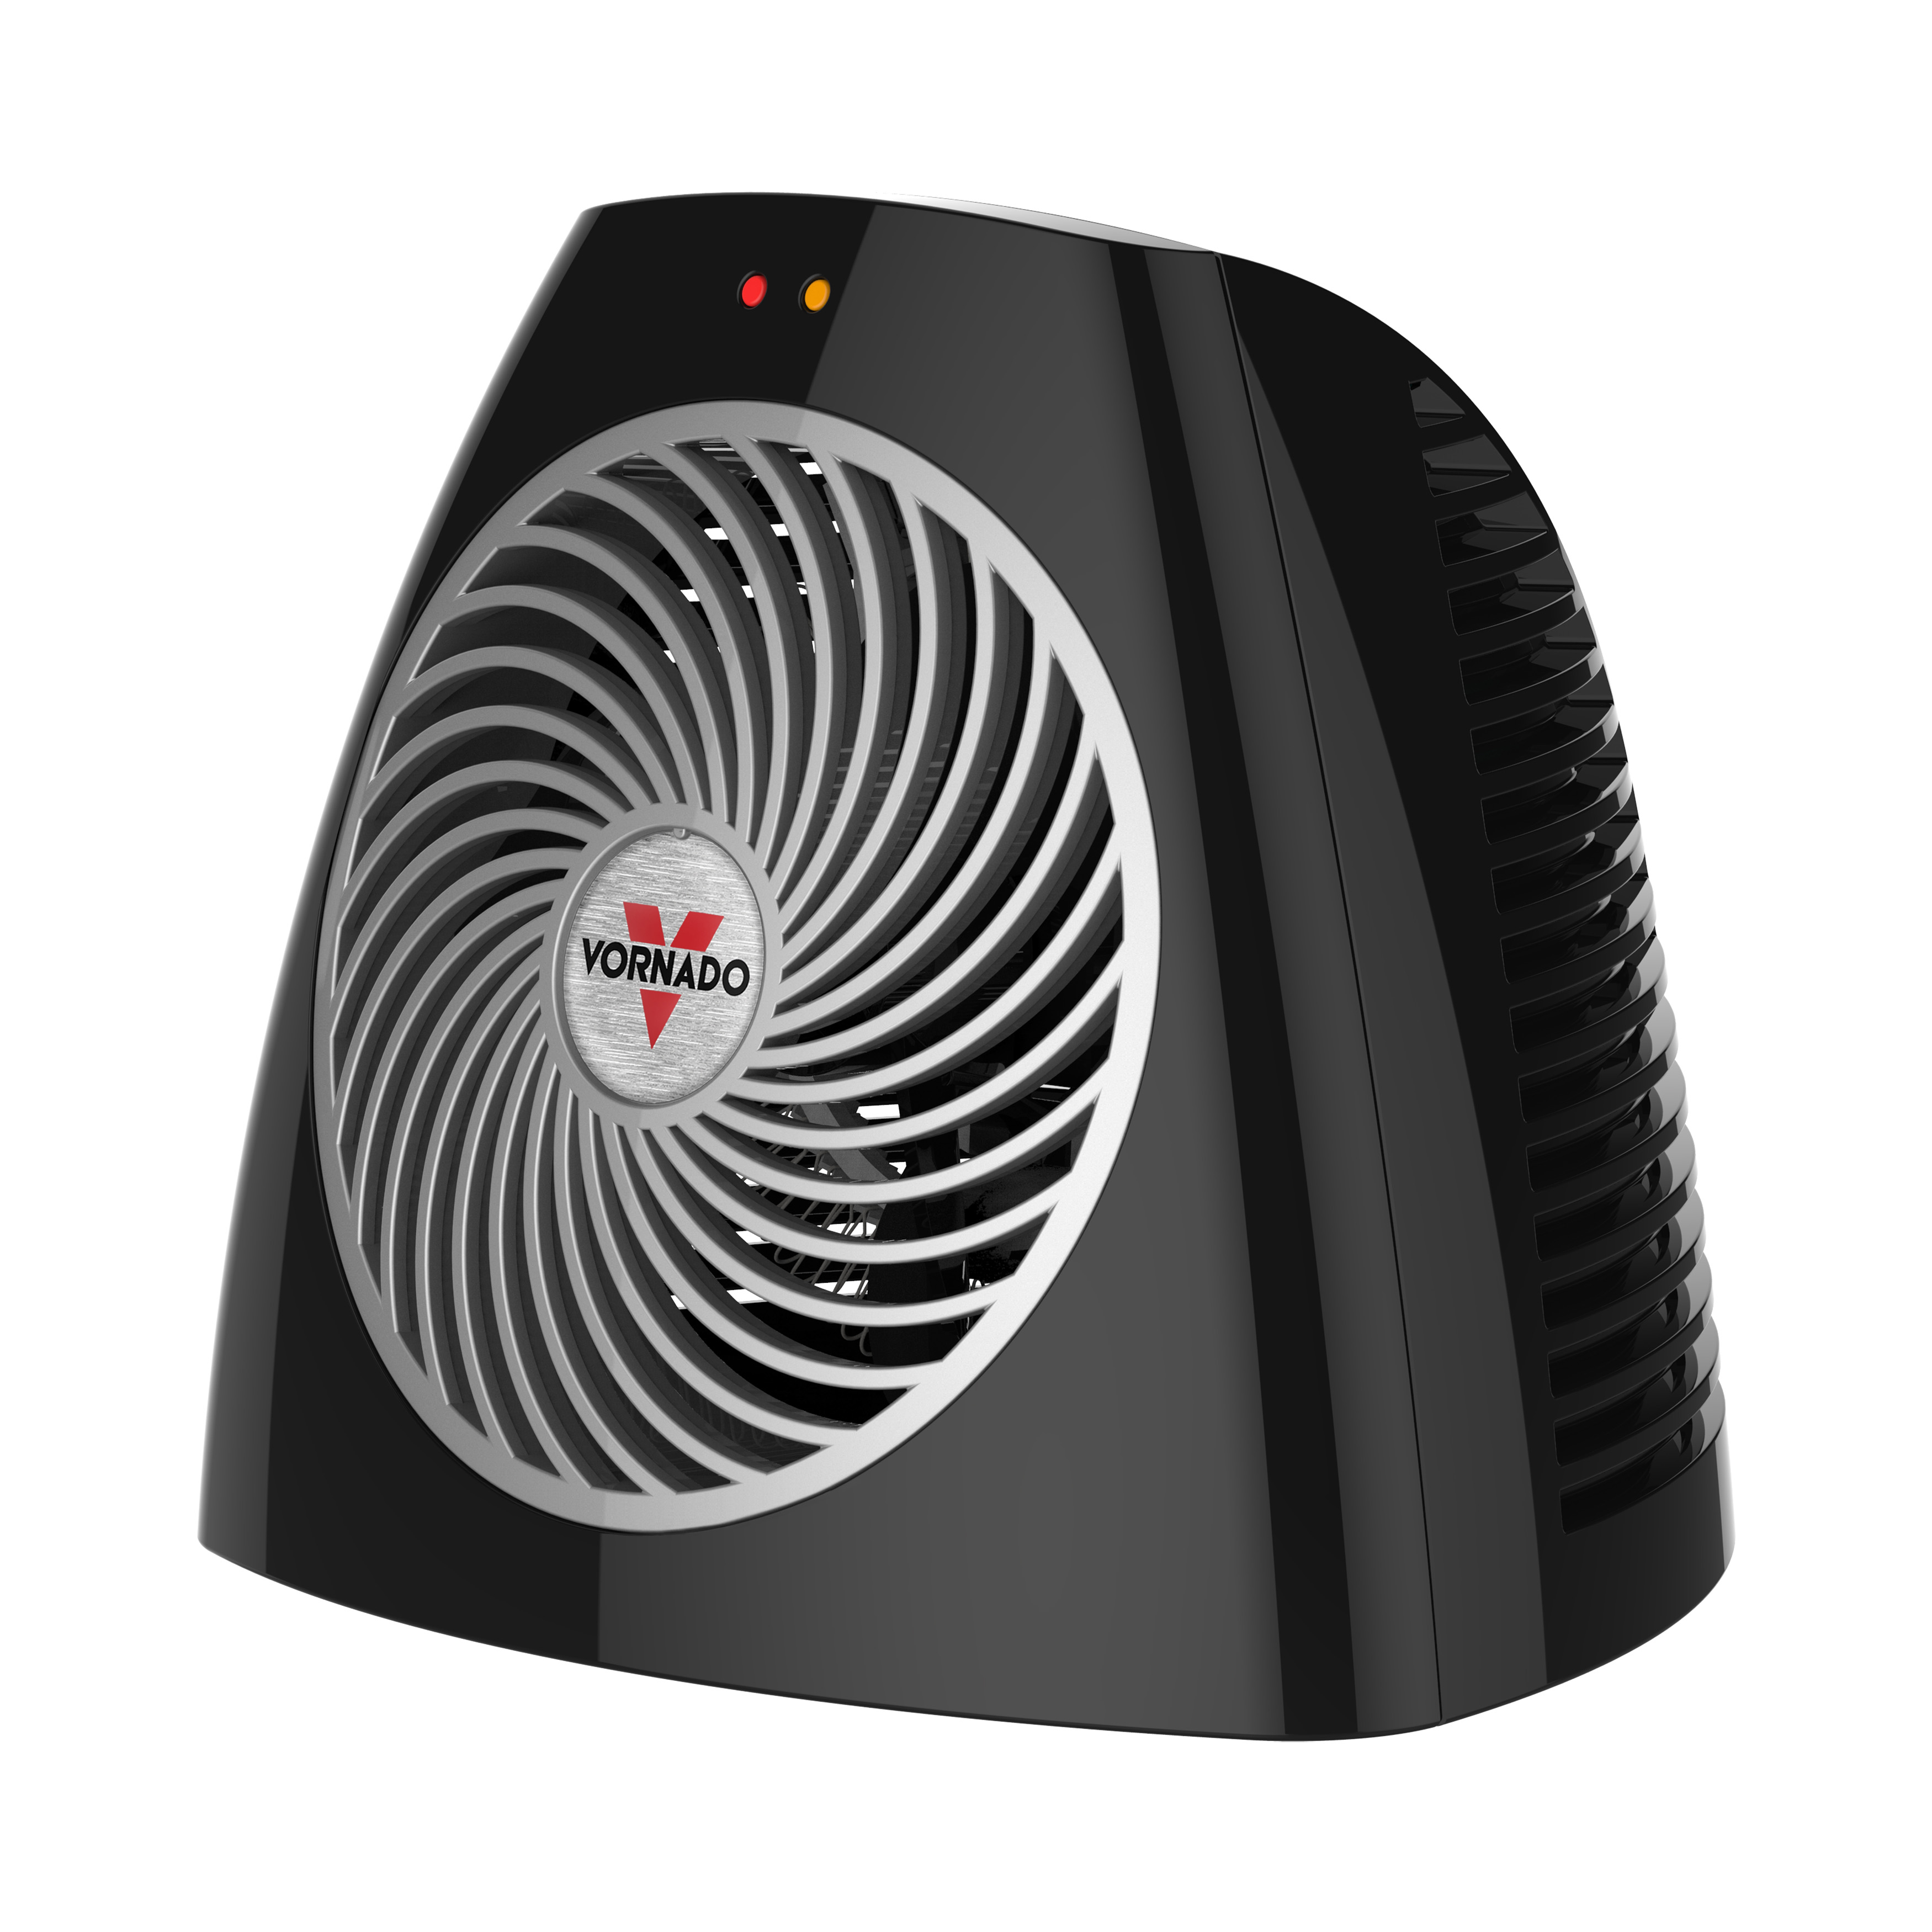 Vornado VH202 Personal Space Heater with Vortex Heat, Black (New) - image 1 of 5